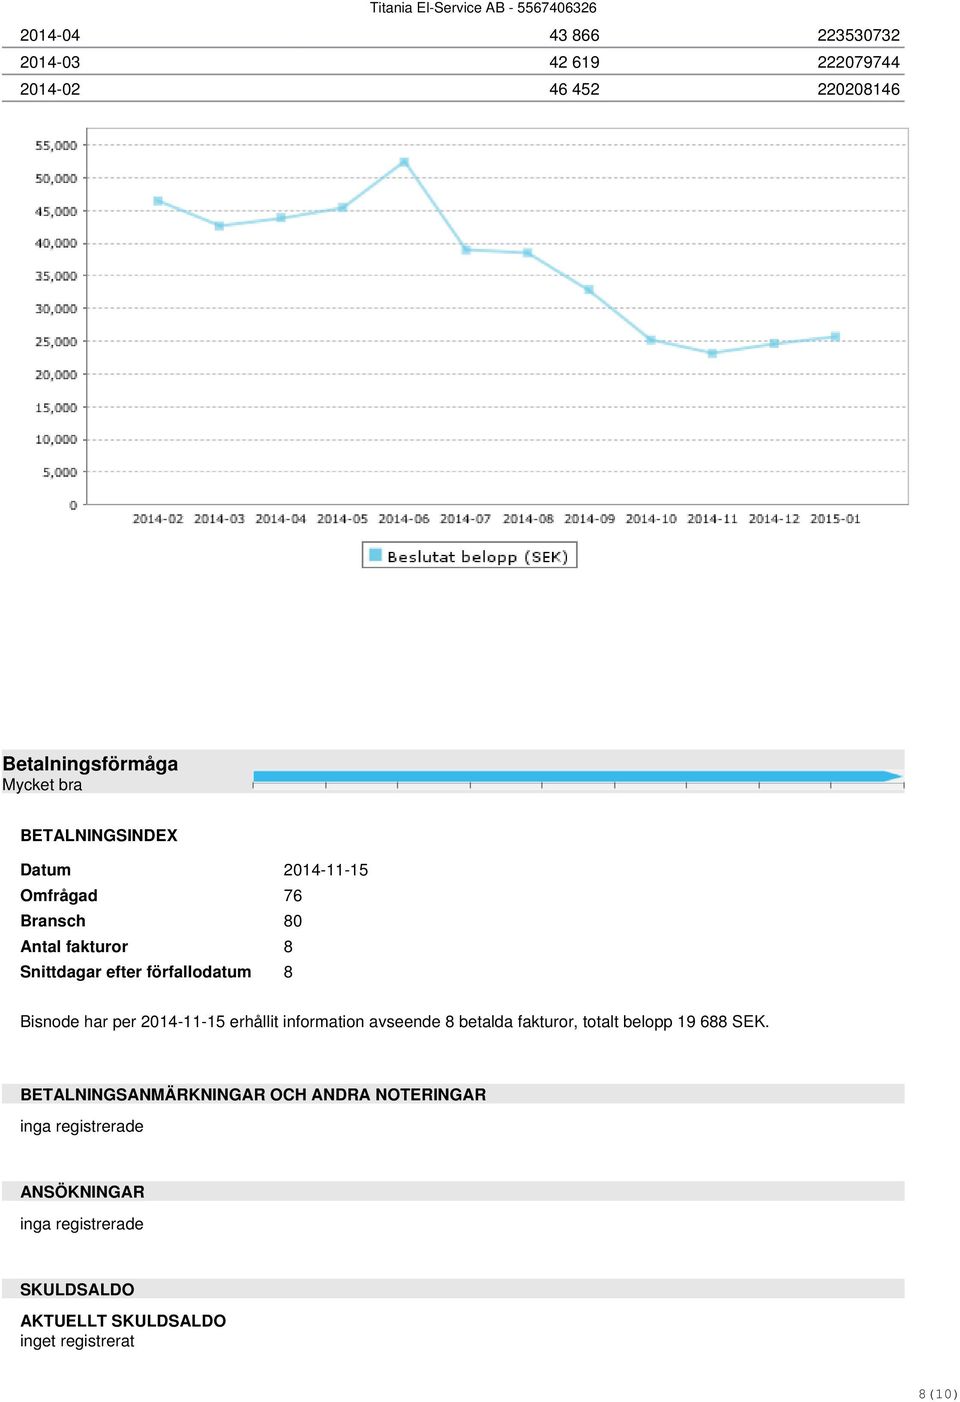 Bisnode har per 2014-11-15 erhållit information avseende 8 betalda fakturor, totalt belopp 19 688 SEK.